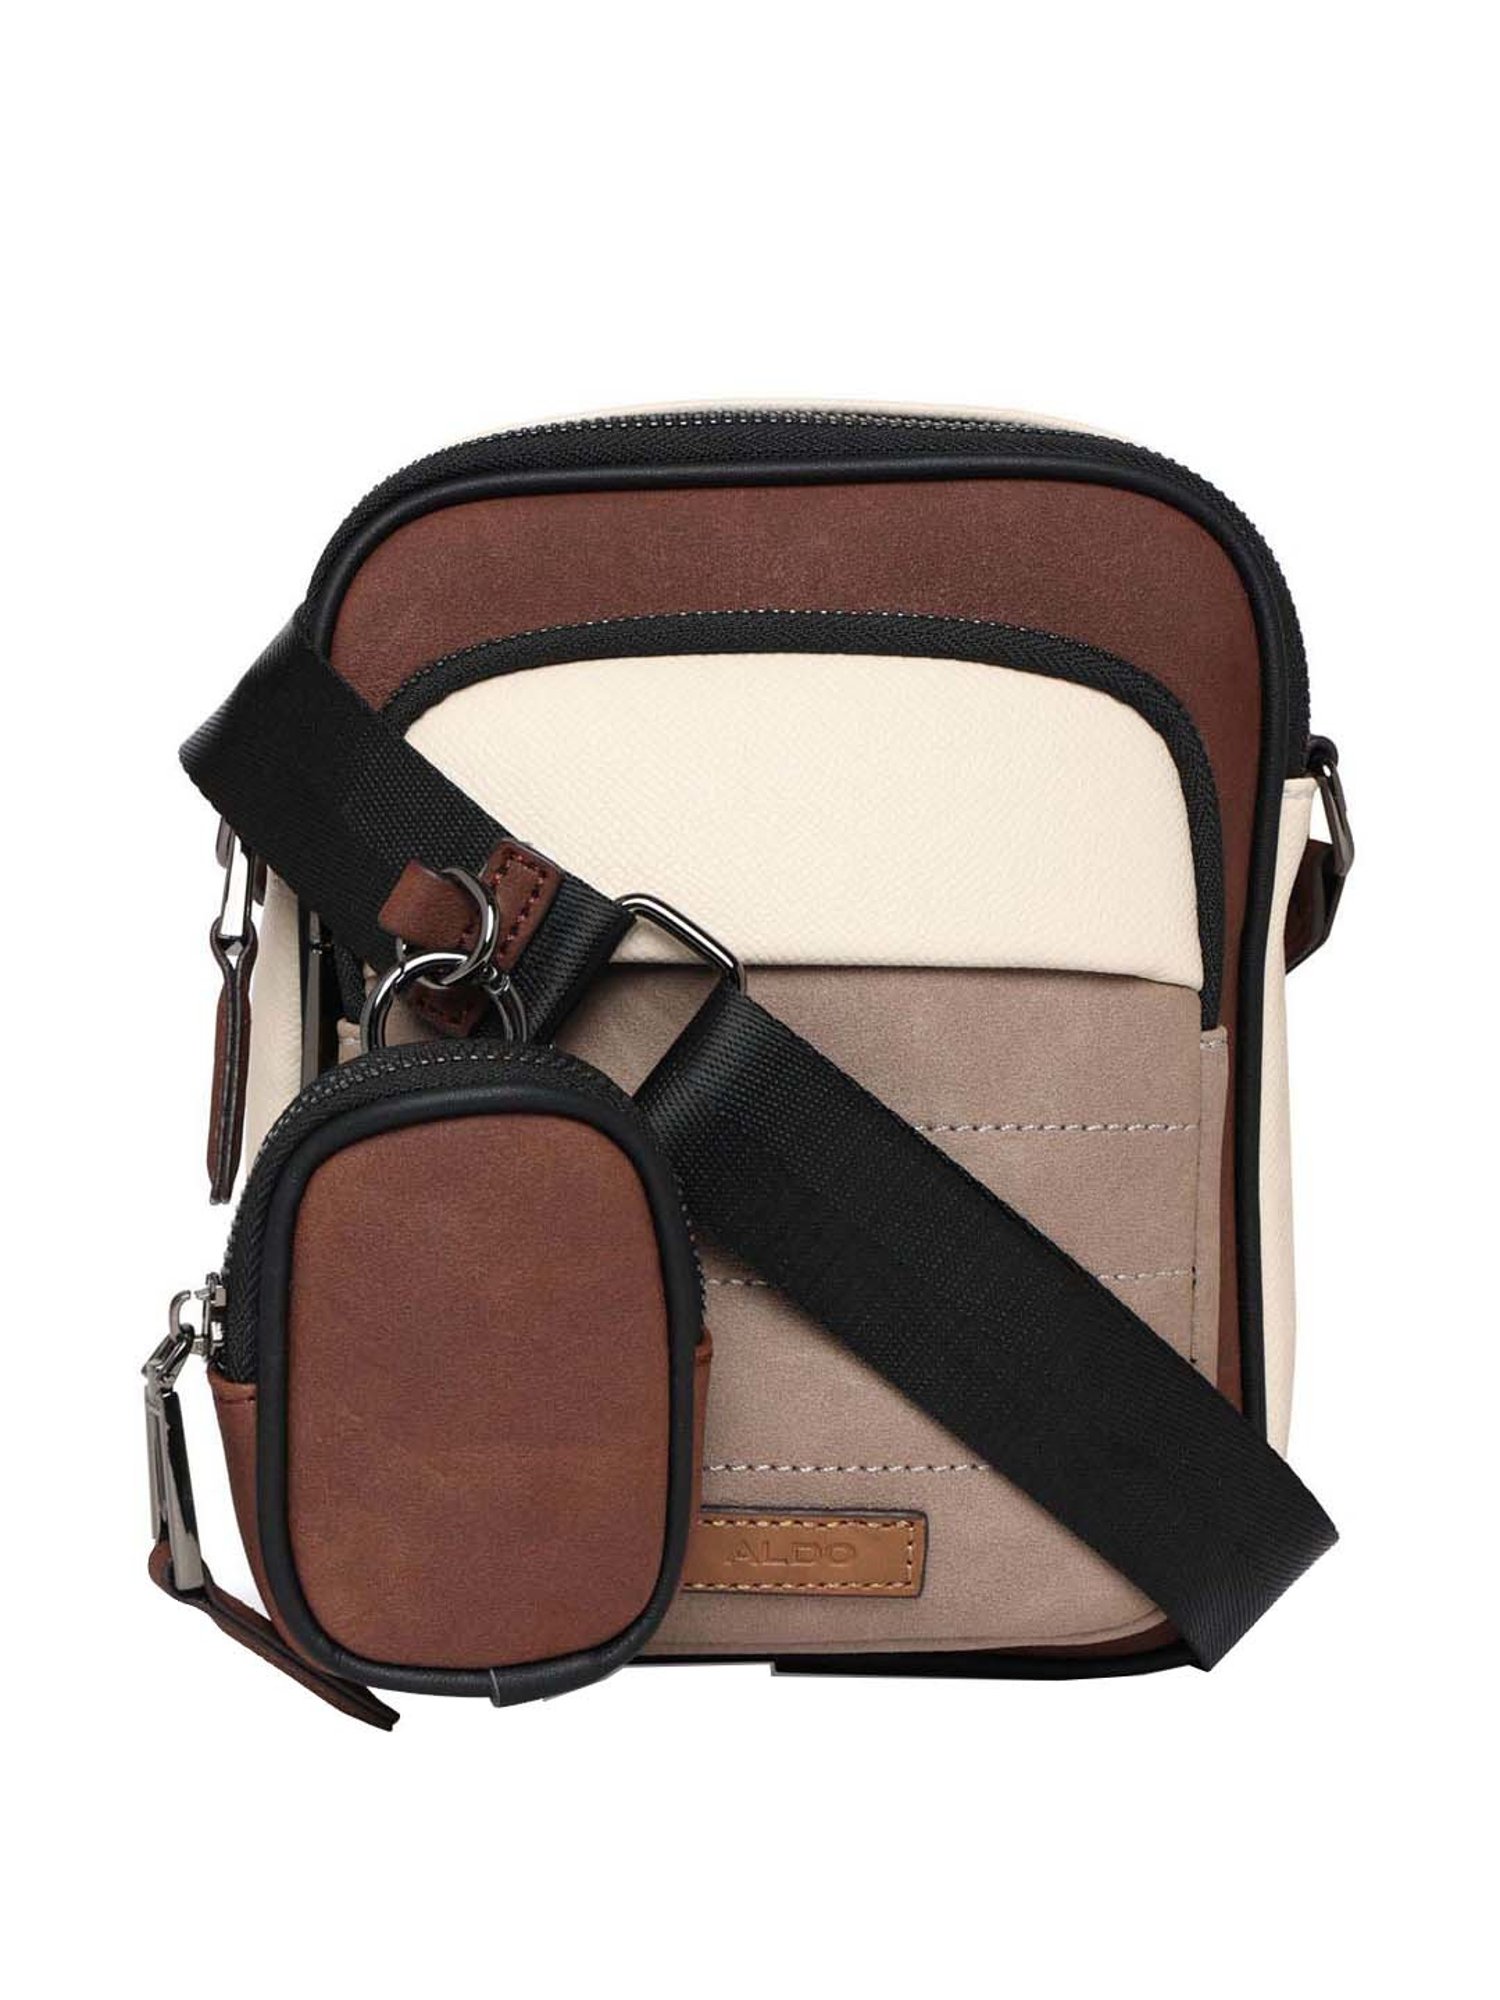 Aldo Crossbody Purse | Purses crossbody, Black and white purses, Leather  shoulder purse